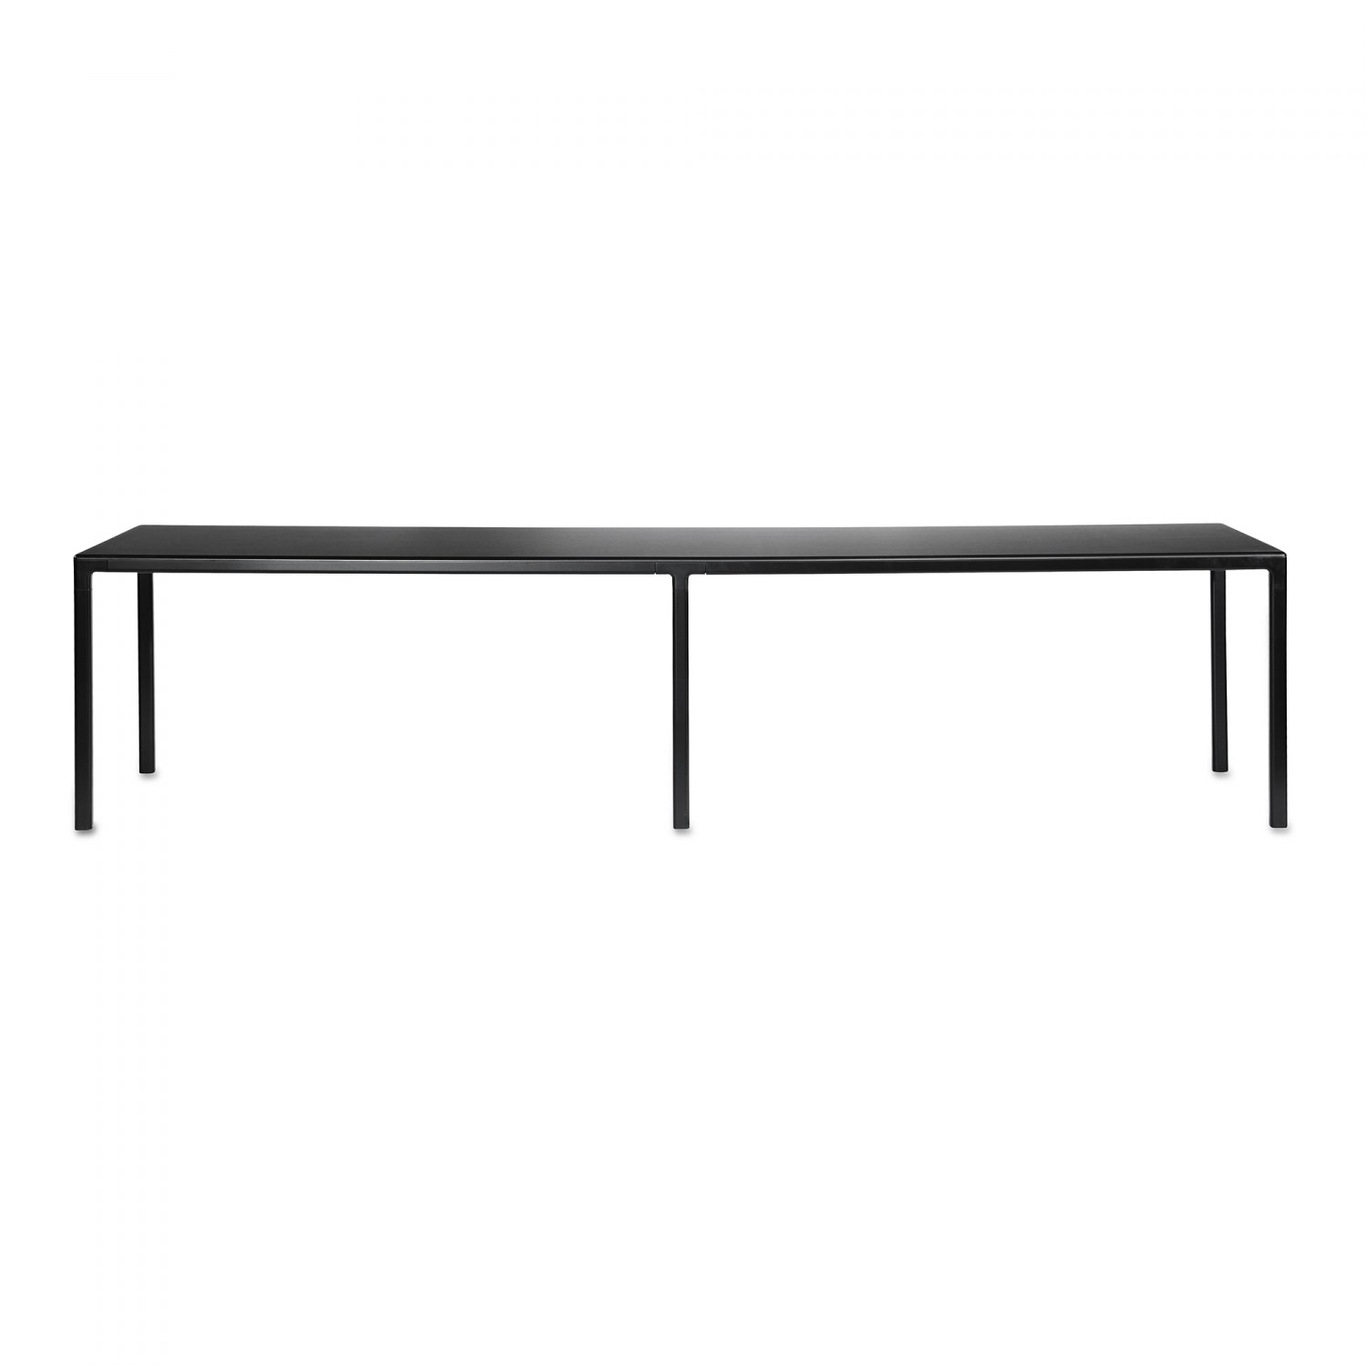 T12 Table 95x320 cm, Black